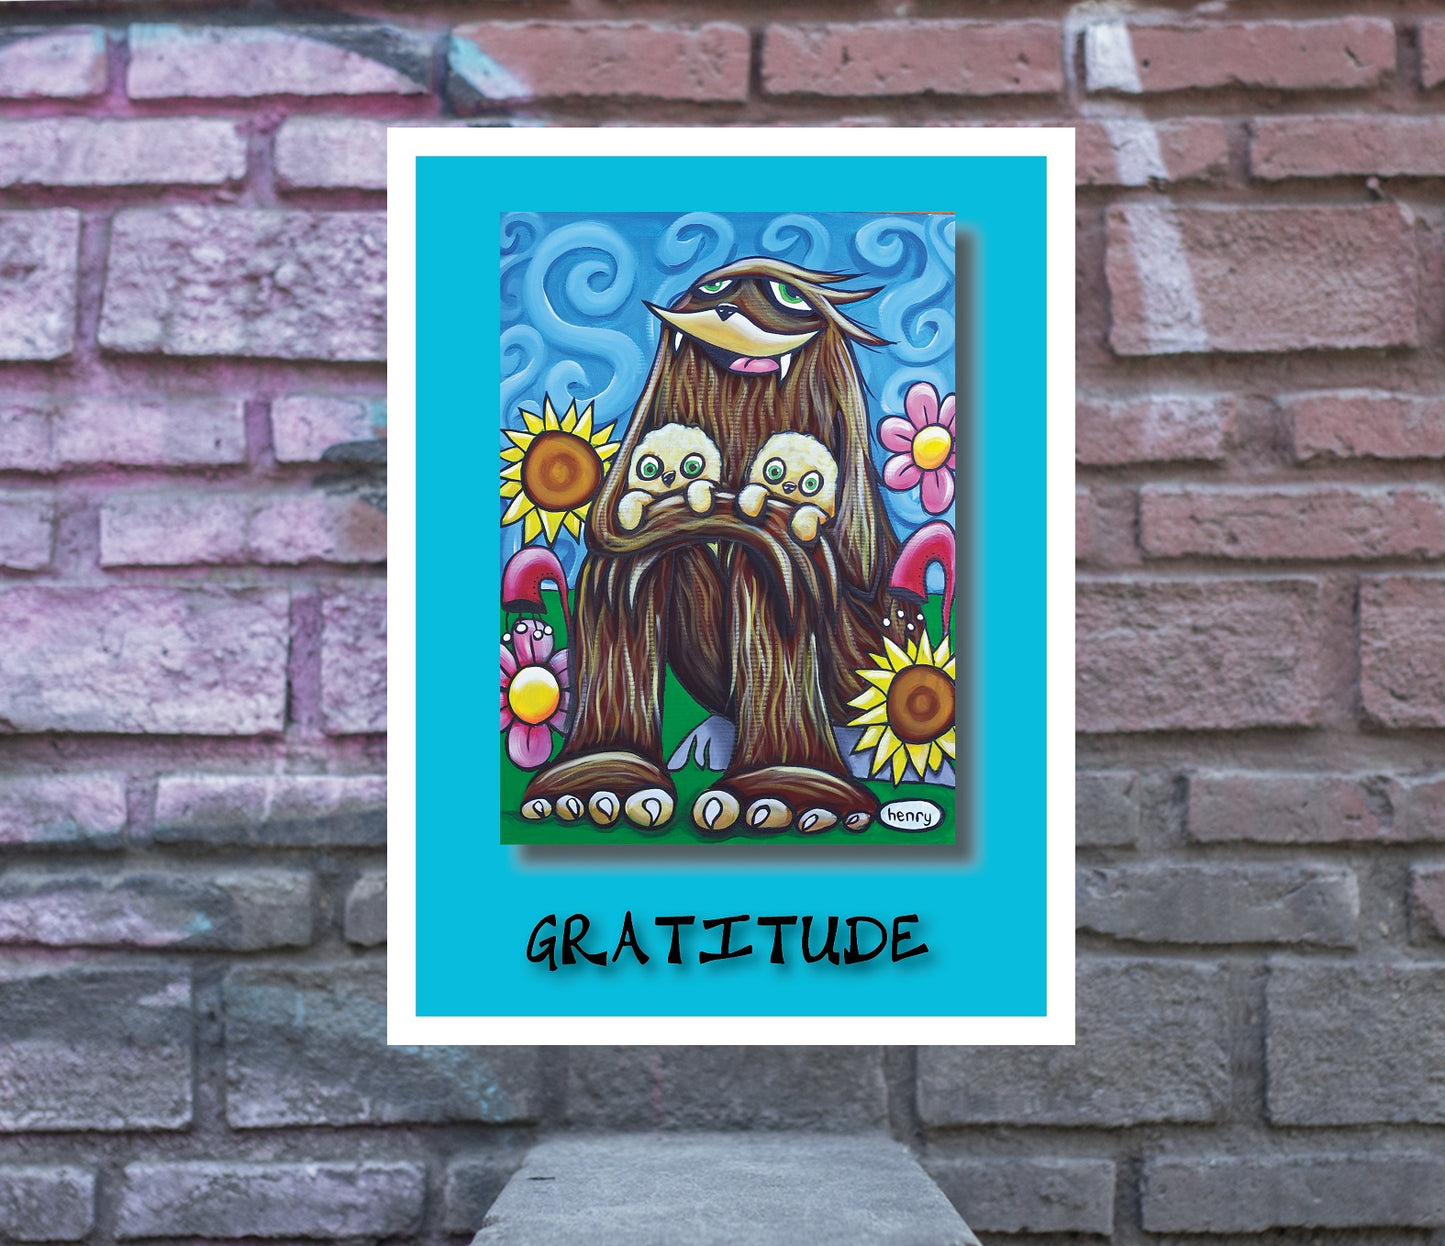 Gratitude - A Radical Abundance Poster